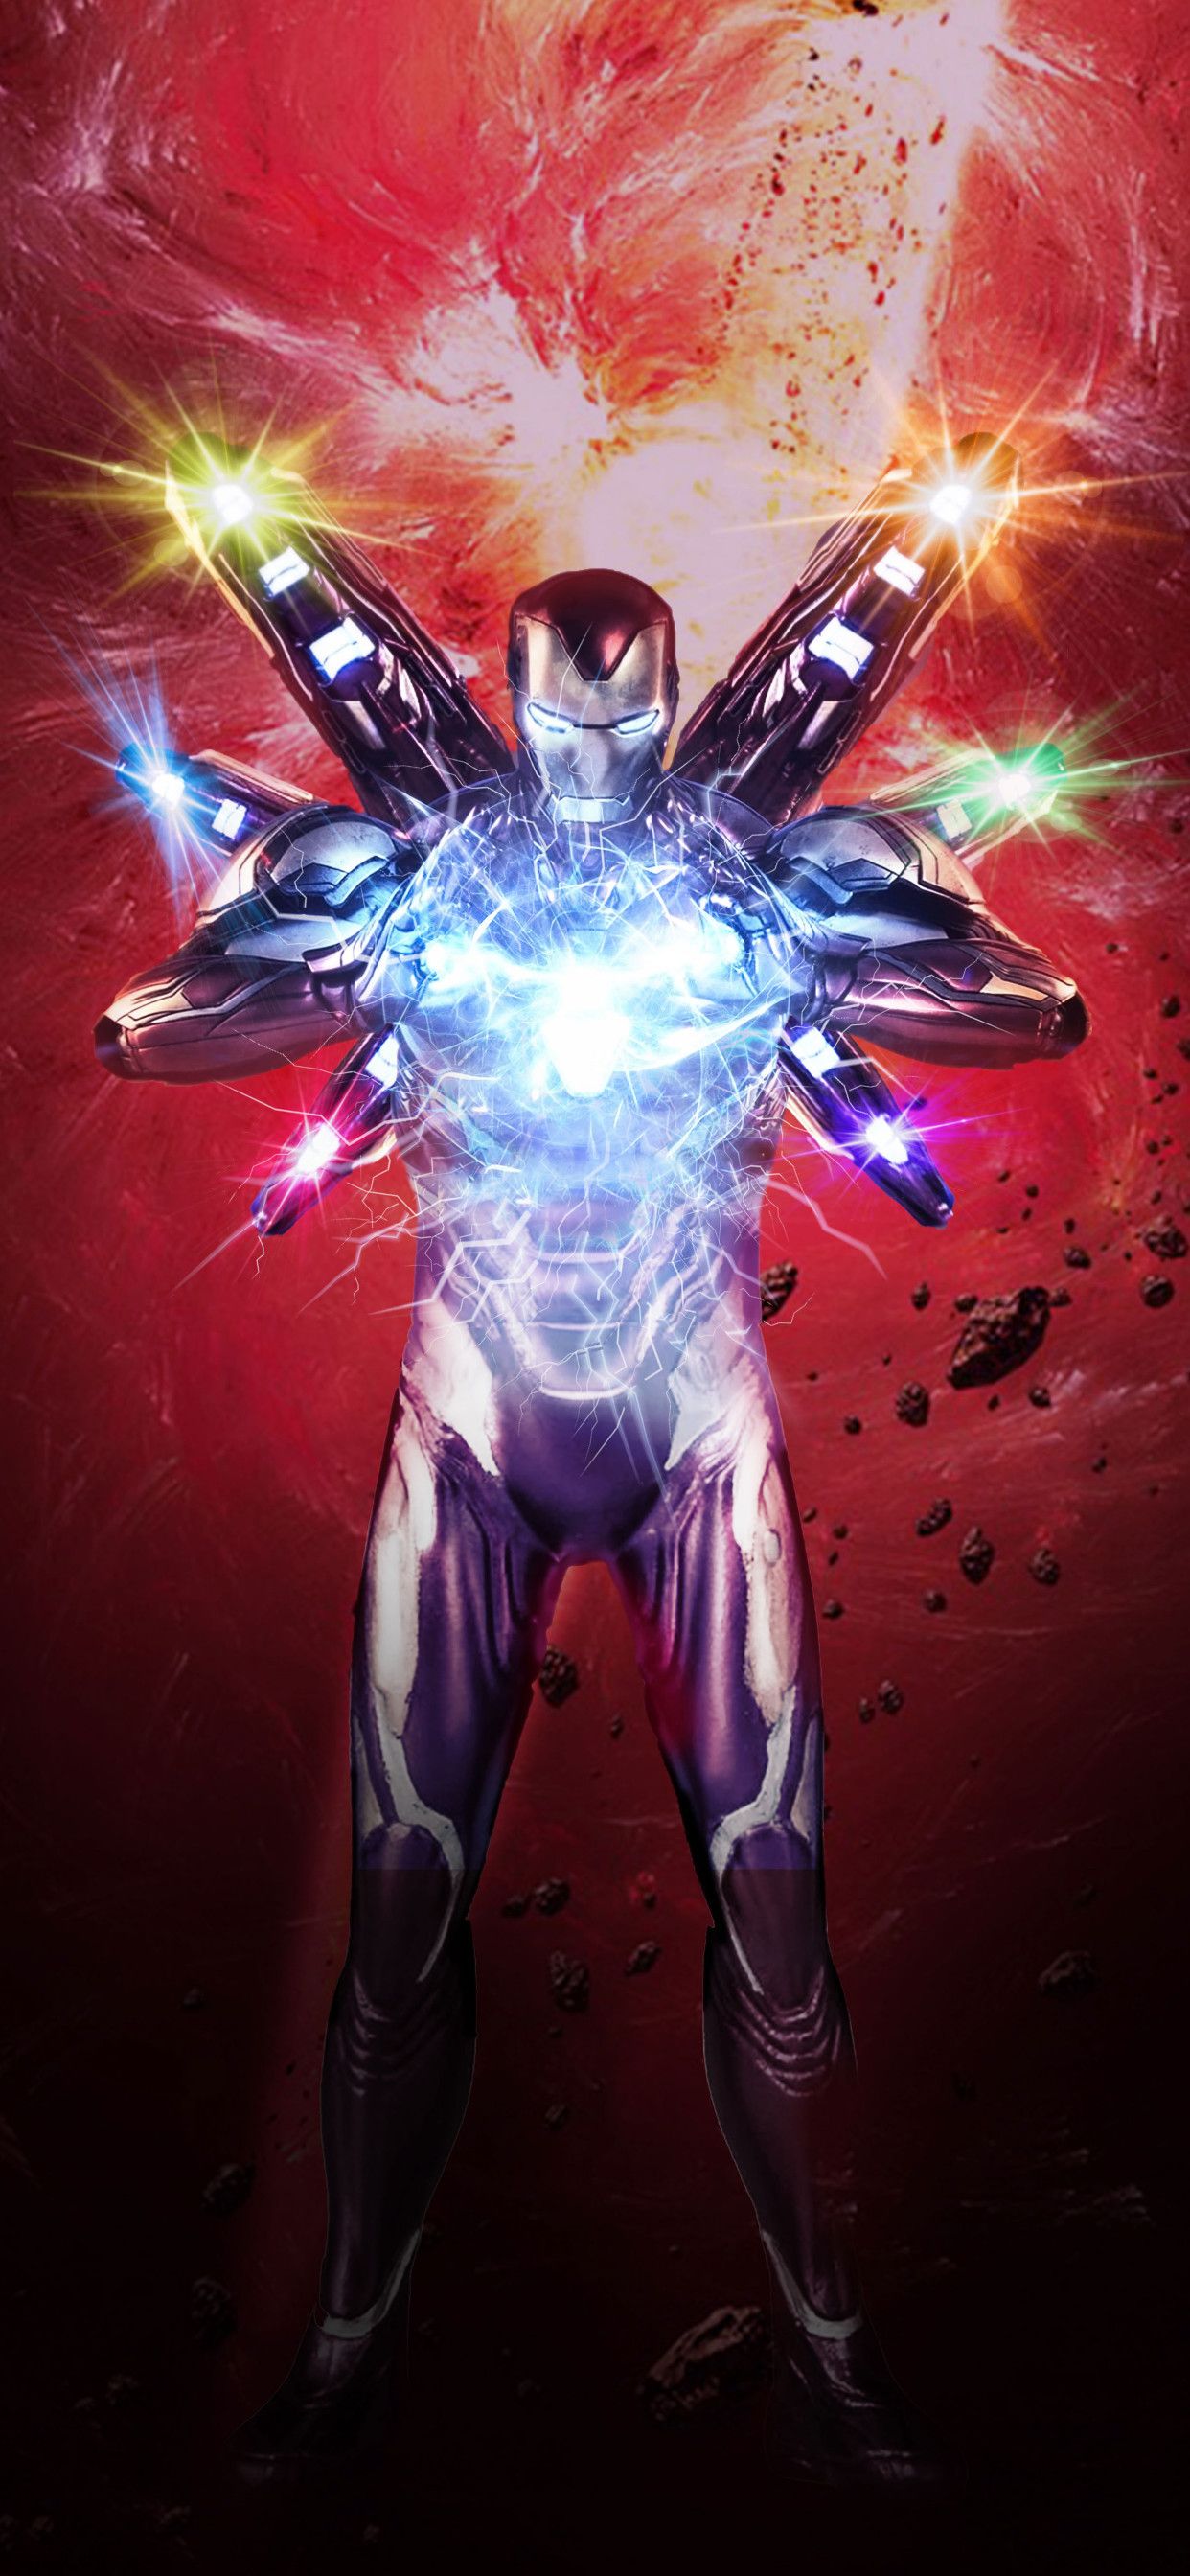 Avengers Endgame New Infinity Gauntlet Suit iPhone XS